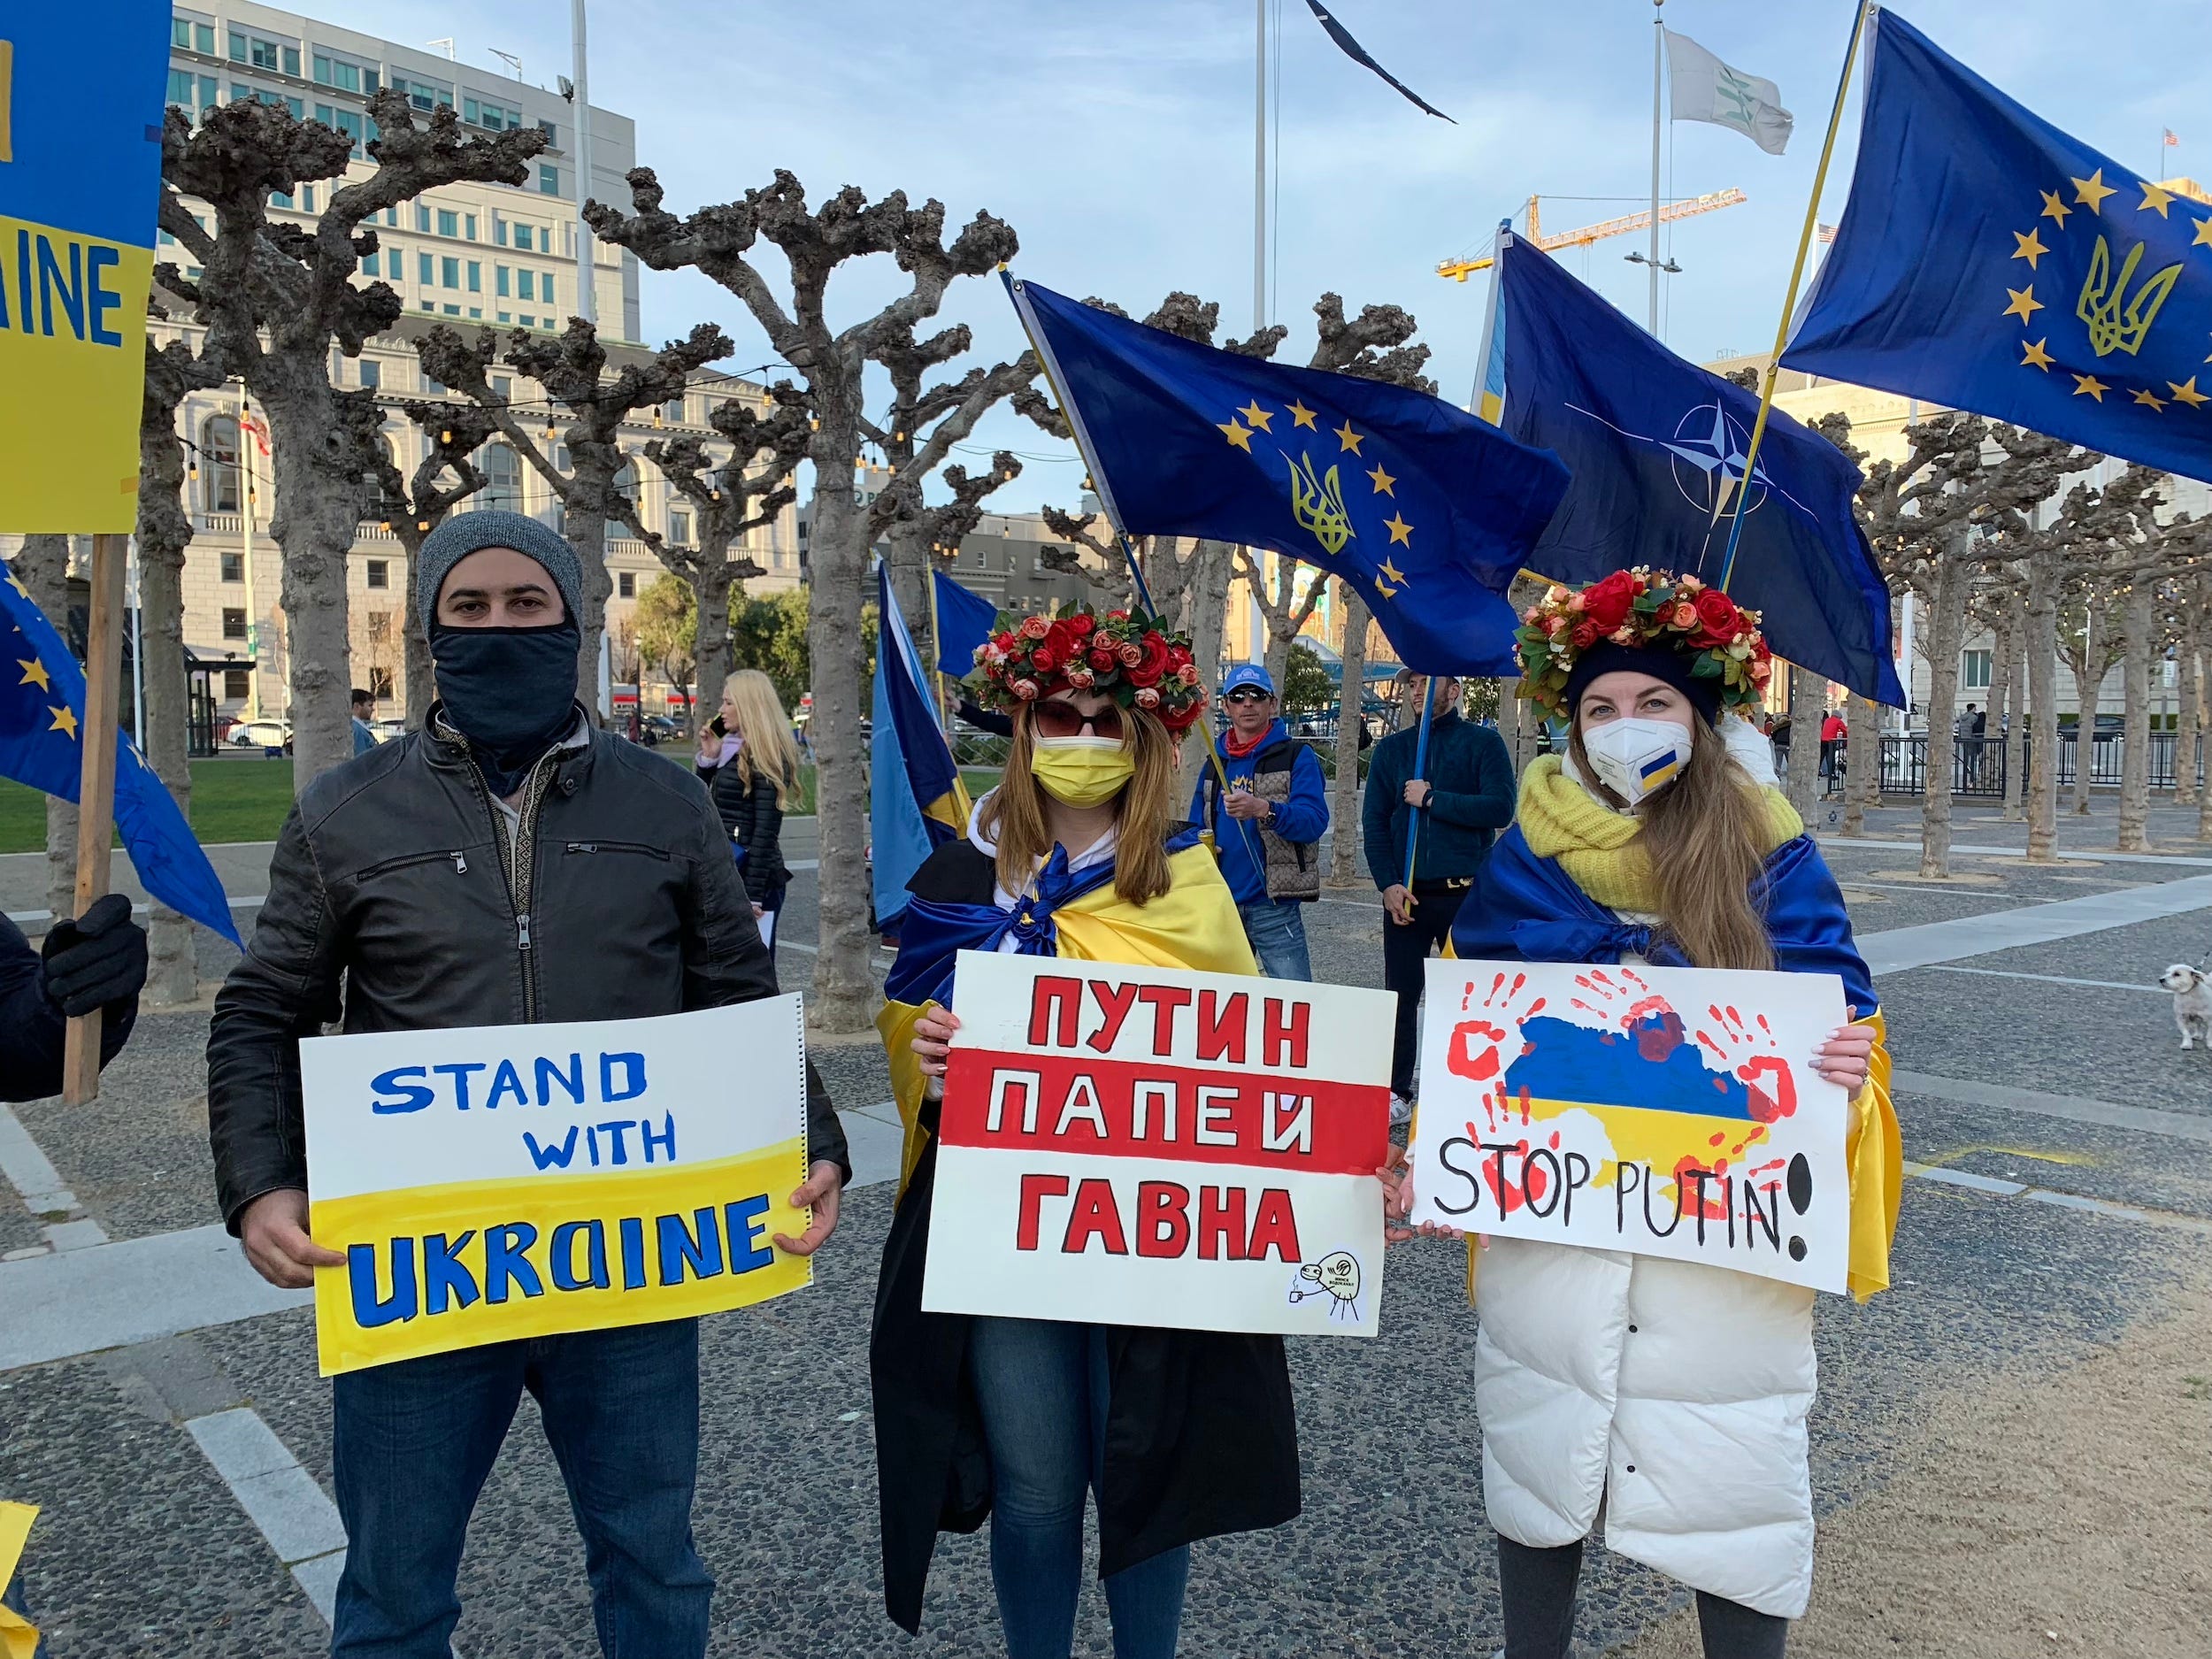 three masked protestors pose with pro-ukraine and anti-putin signs